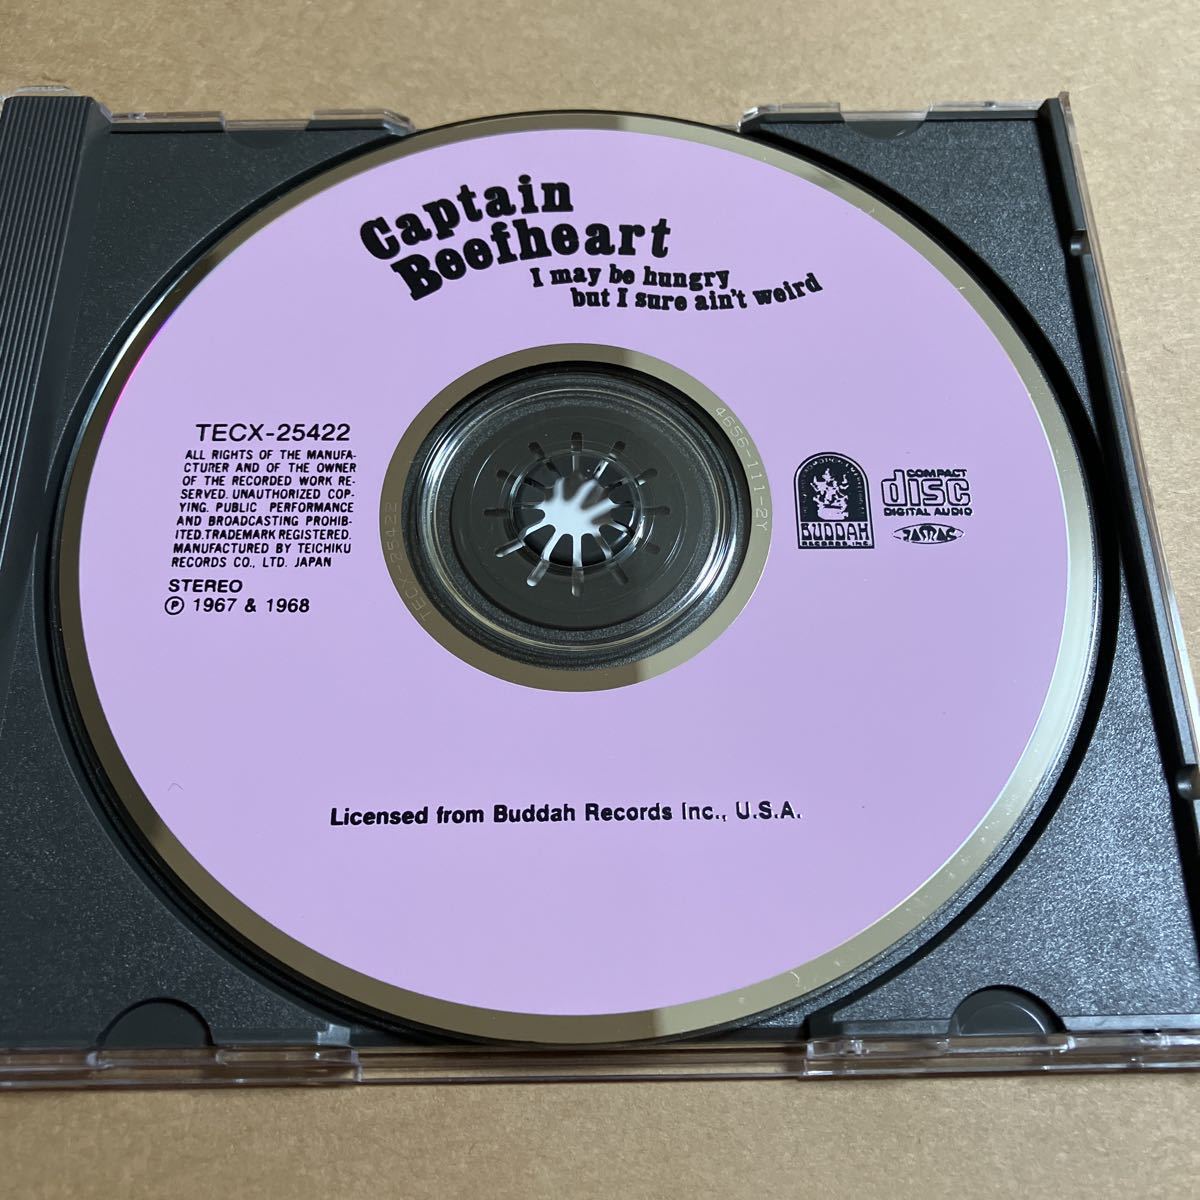 CD CAPTAIN BEEFHEART / キャプテンBの秘密 キャプテン・ビーフハート・レア・コレクション1967-1968 TECX25422 盤面キズ多い_画像3